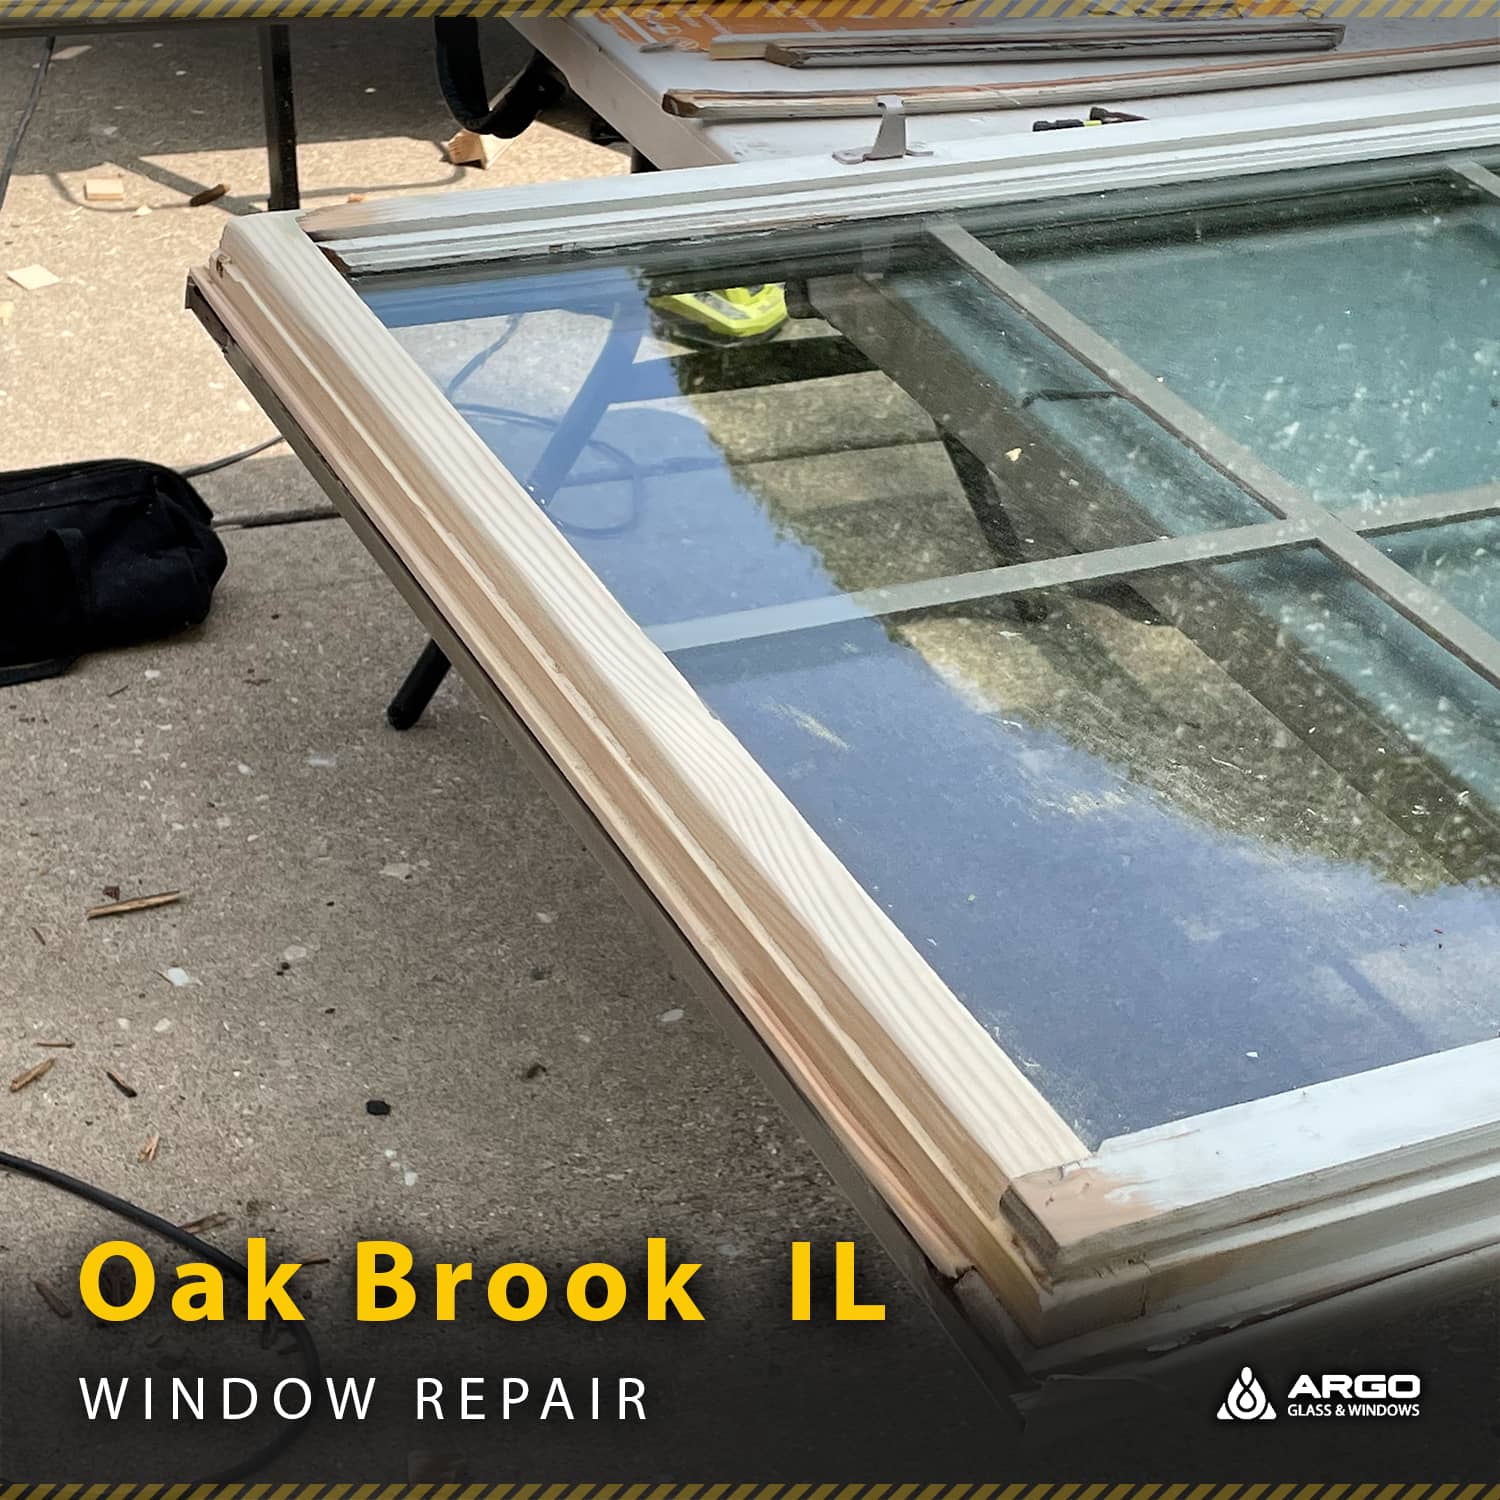 Professional Window Repair company